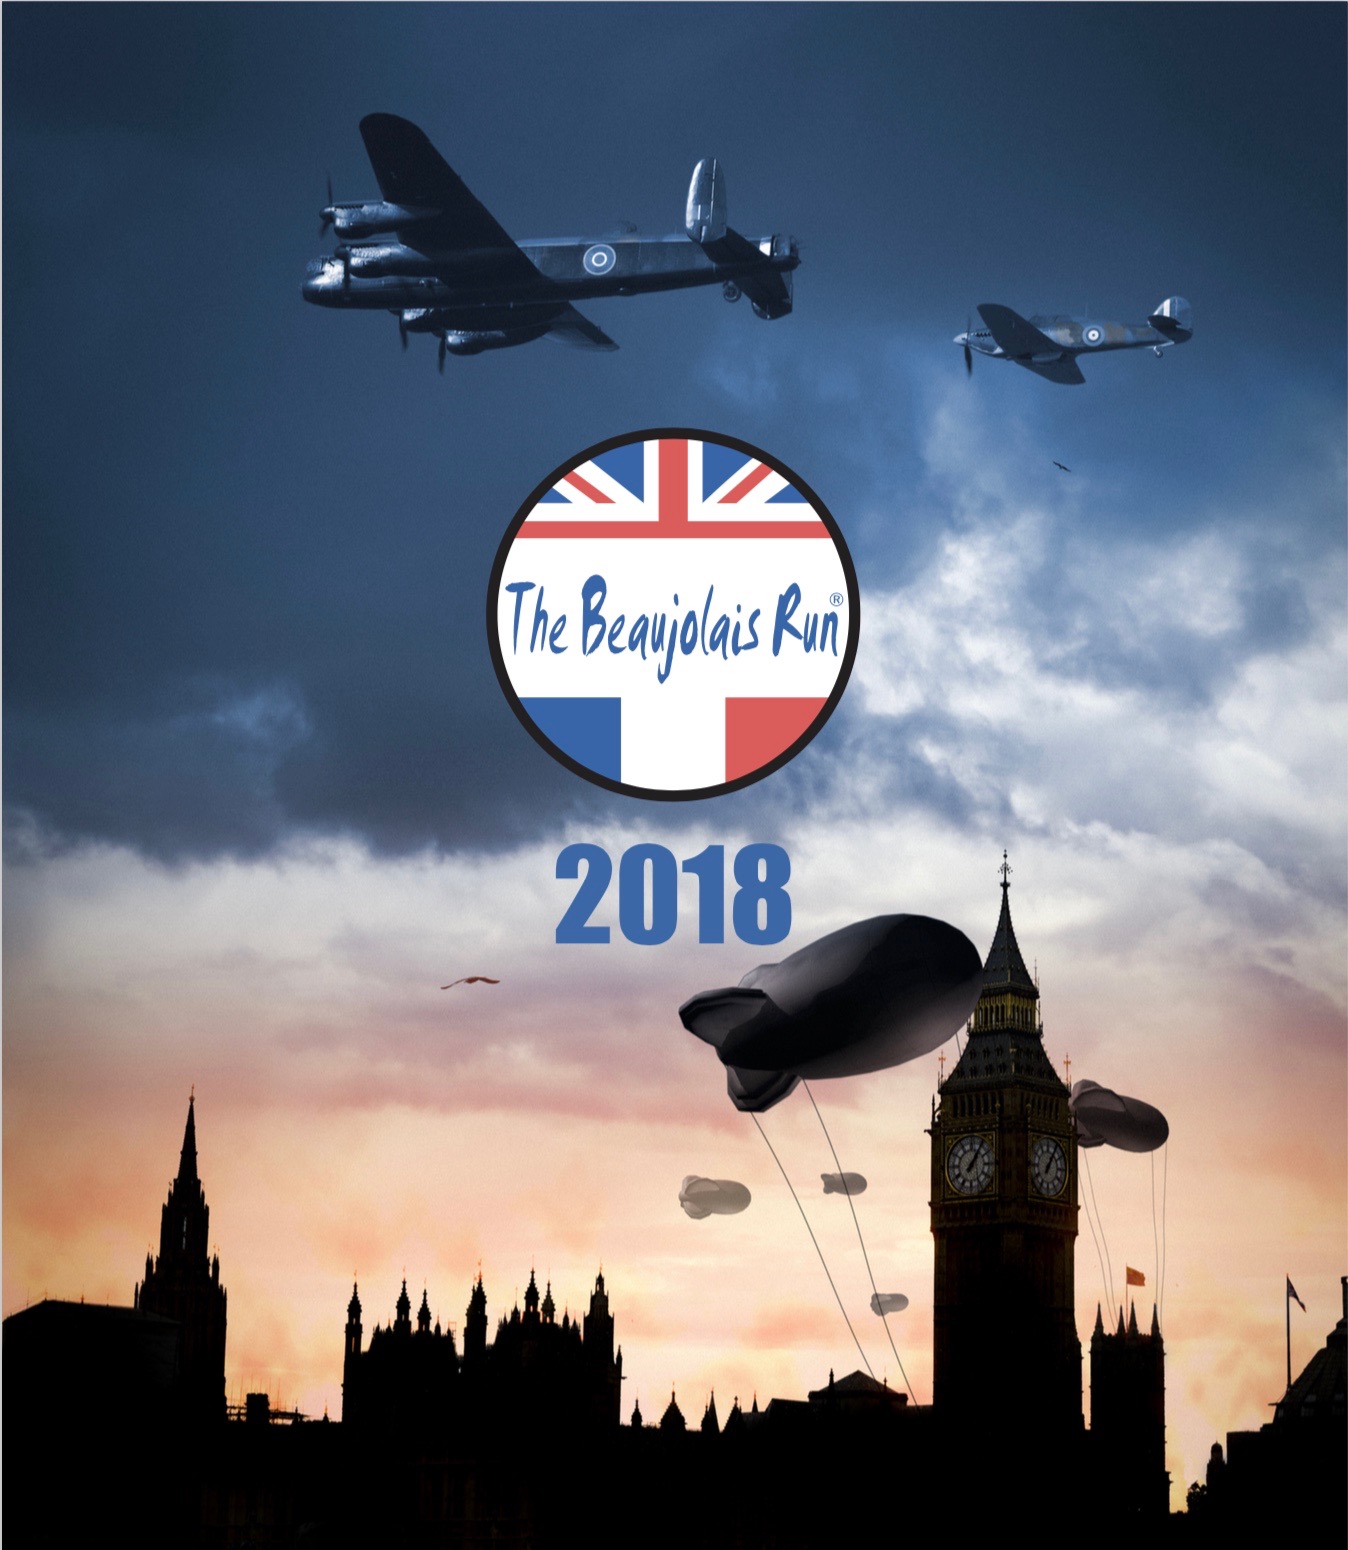 Beaujolais, Beaujolais Run honors dam-busting Royal Air Force mission, ClassicCars.com Journal